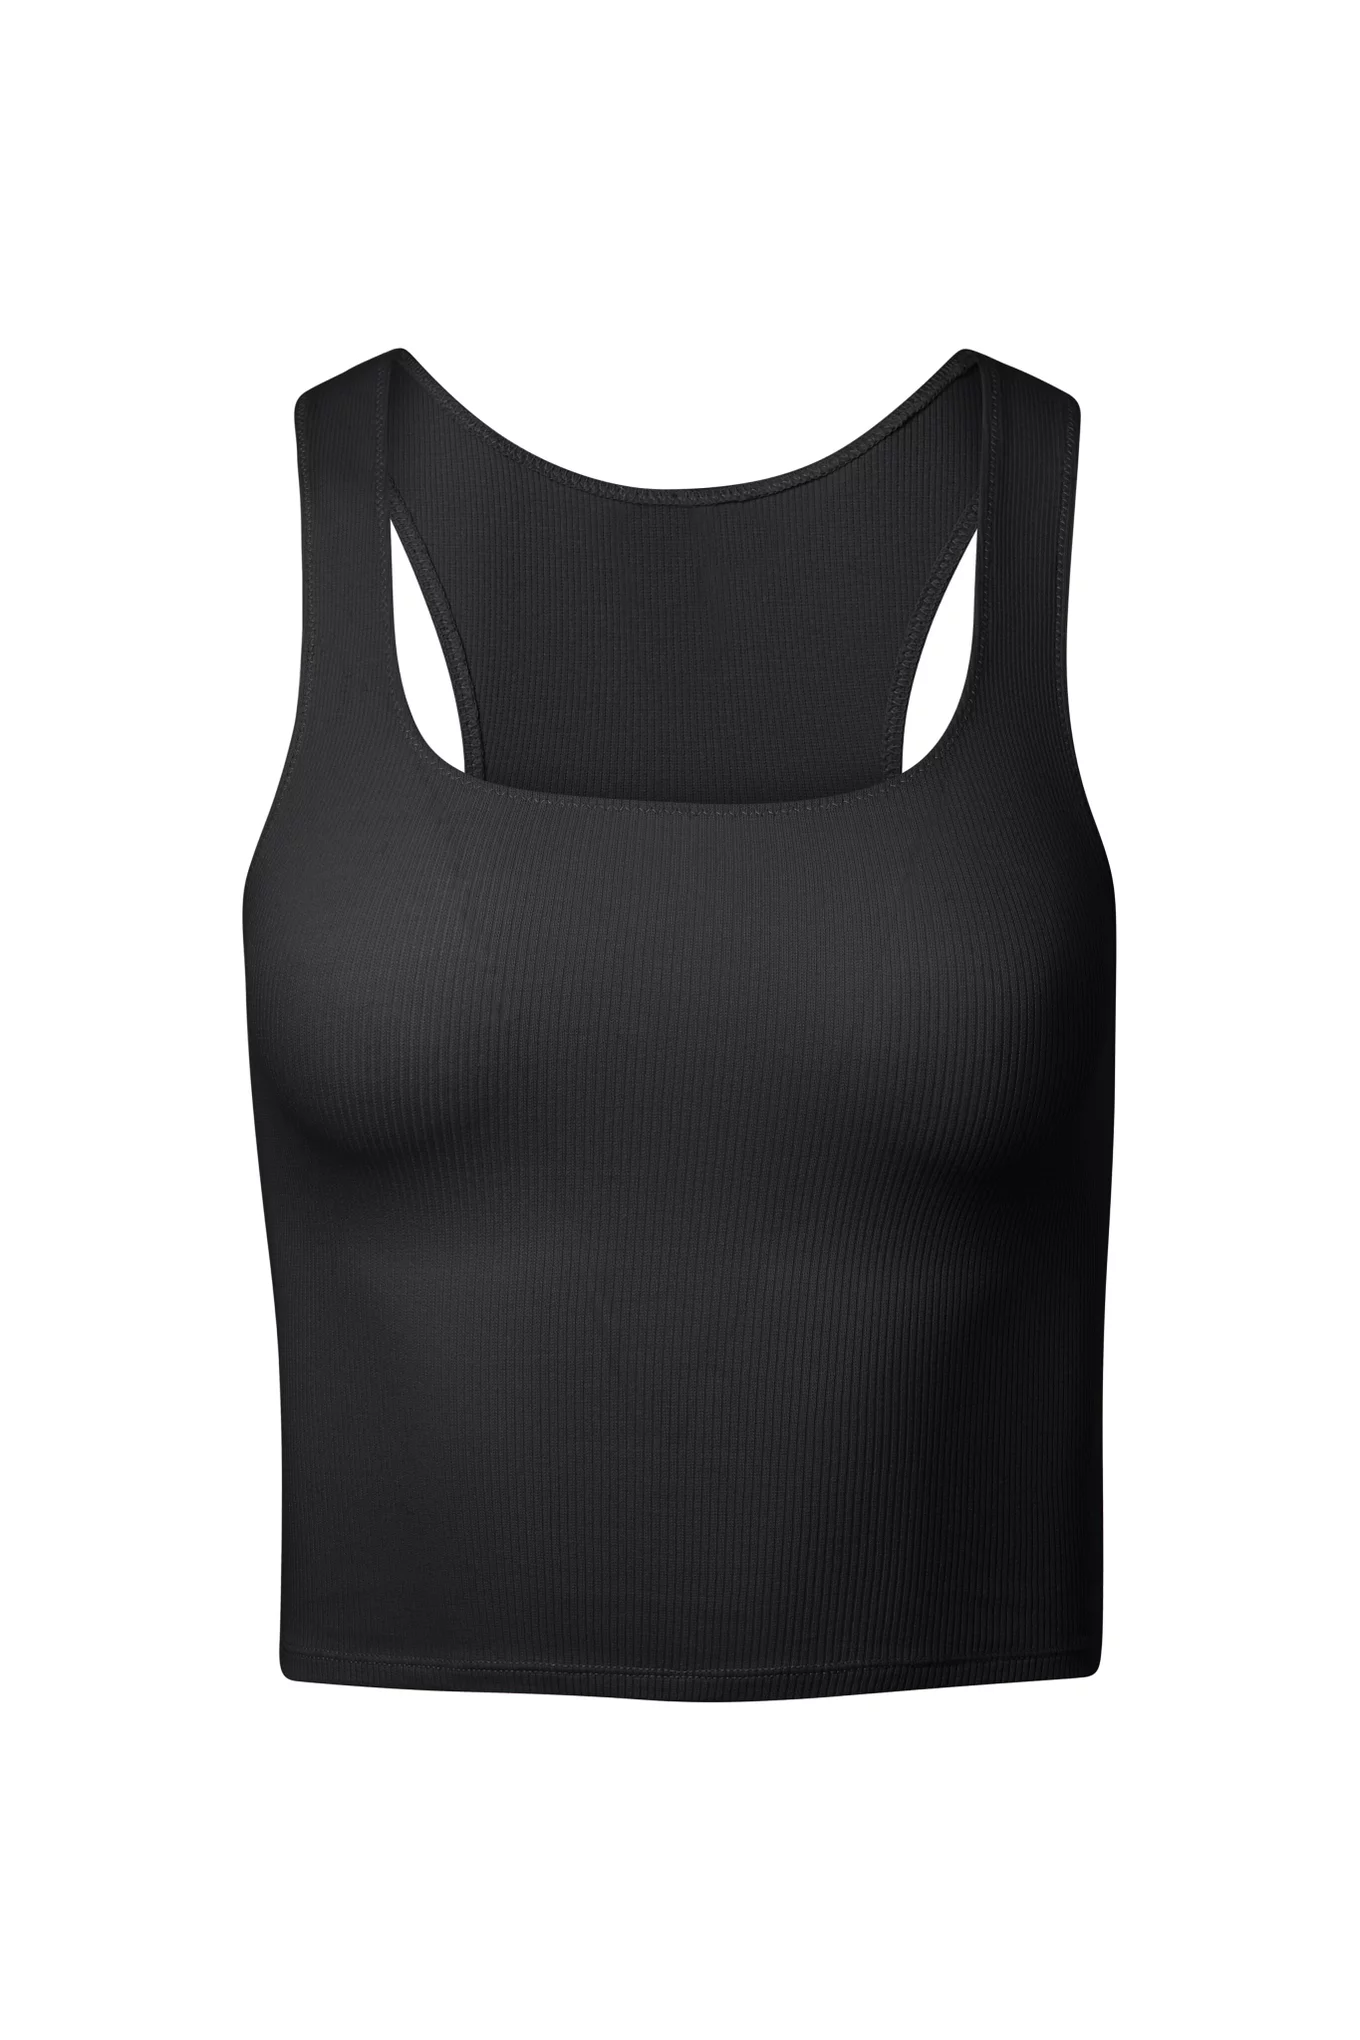  Womens Lingerie Camisole Crop Tank Cotton Racerback  Sleeveless Tops Black XL